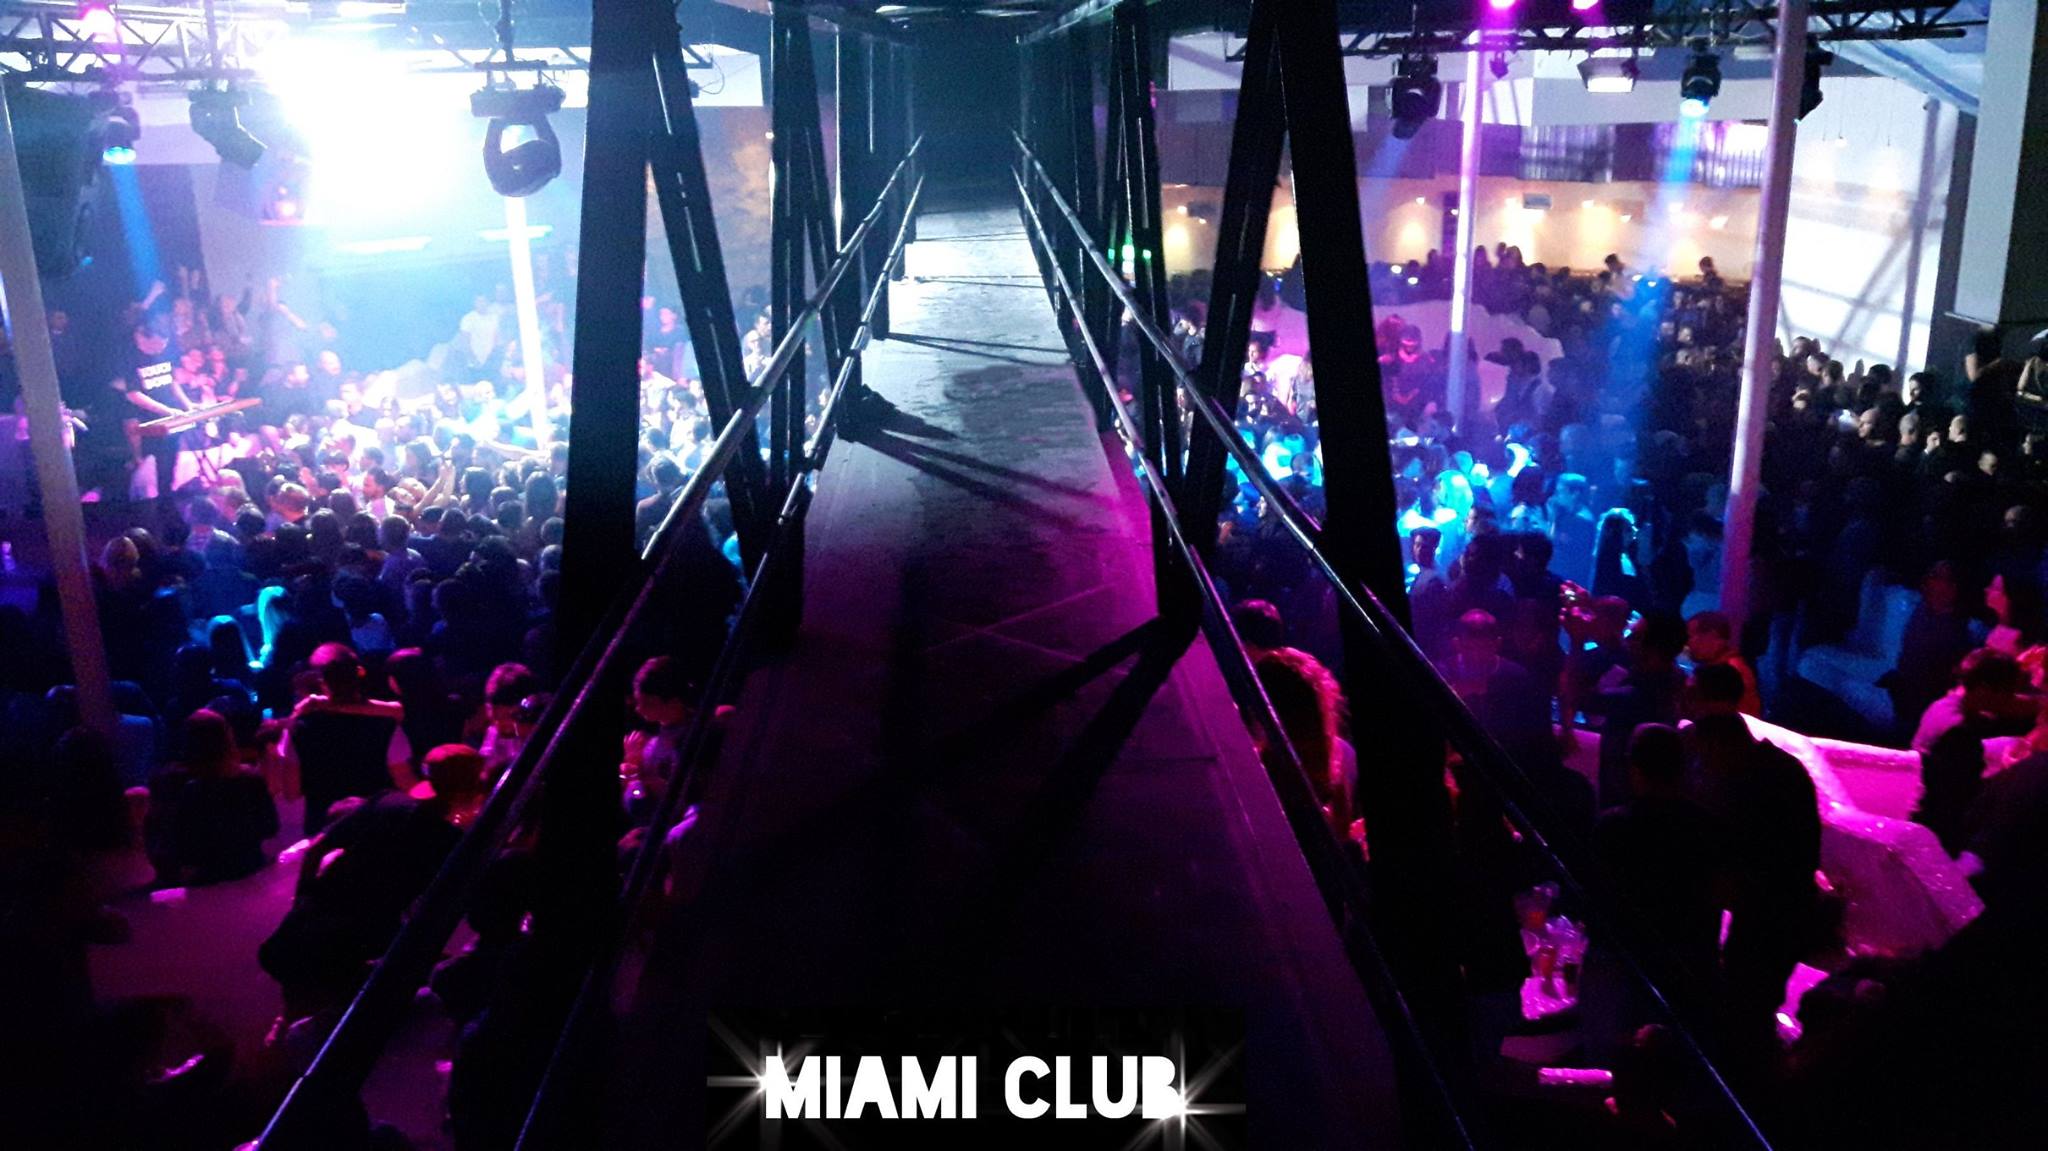 Miami Club Monsano, Rewind, ospiti speciali live i Rockets